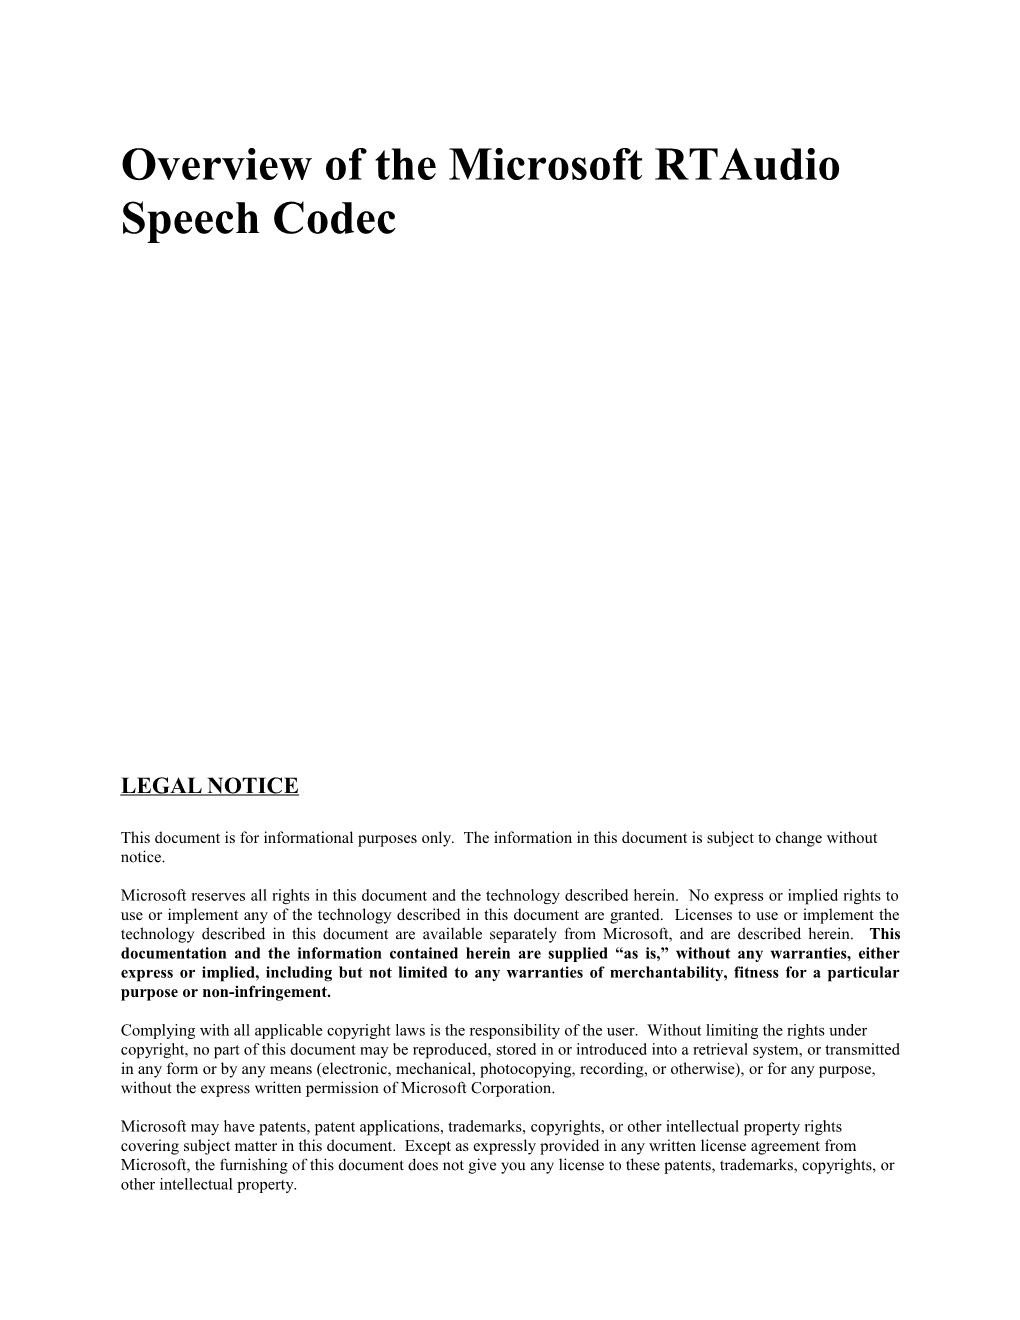 Overview of the Microsoft Rtaudio Speech Codec